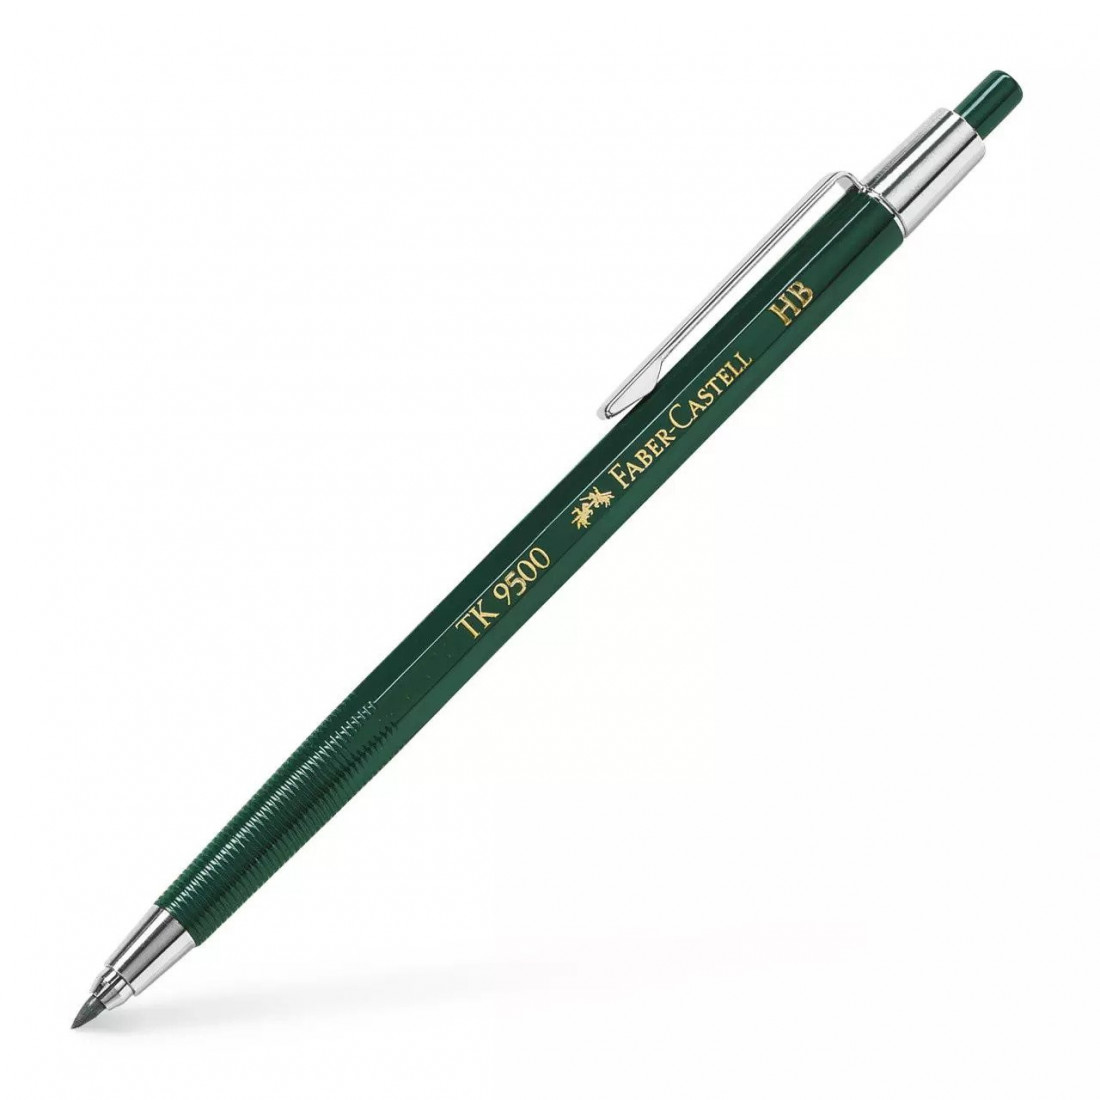 Faber Castell TK 9500 clutch pencil 2mm 139500